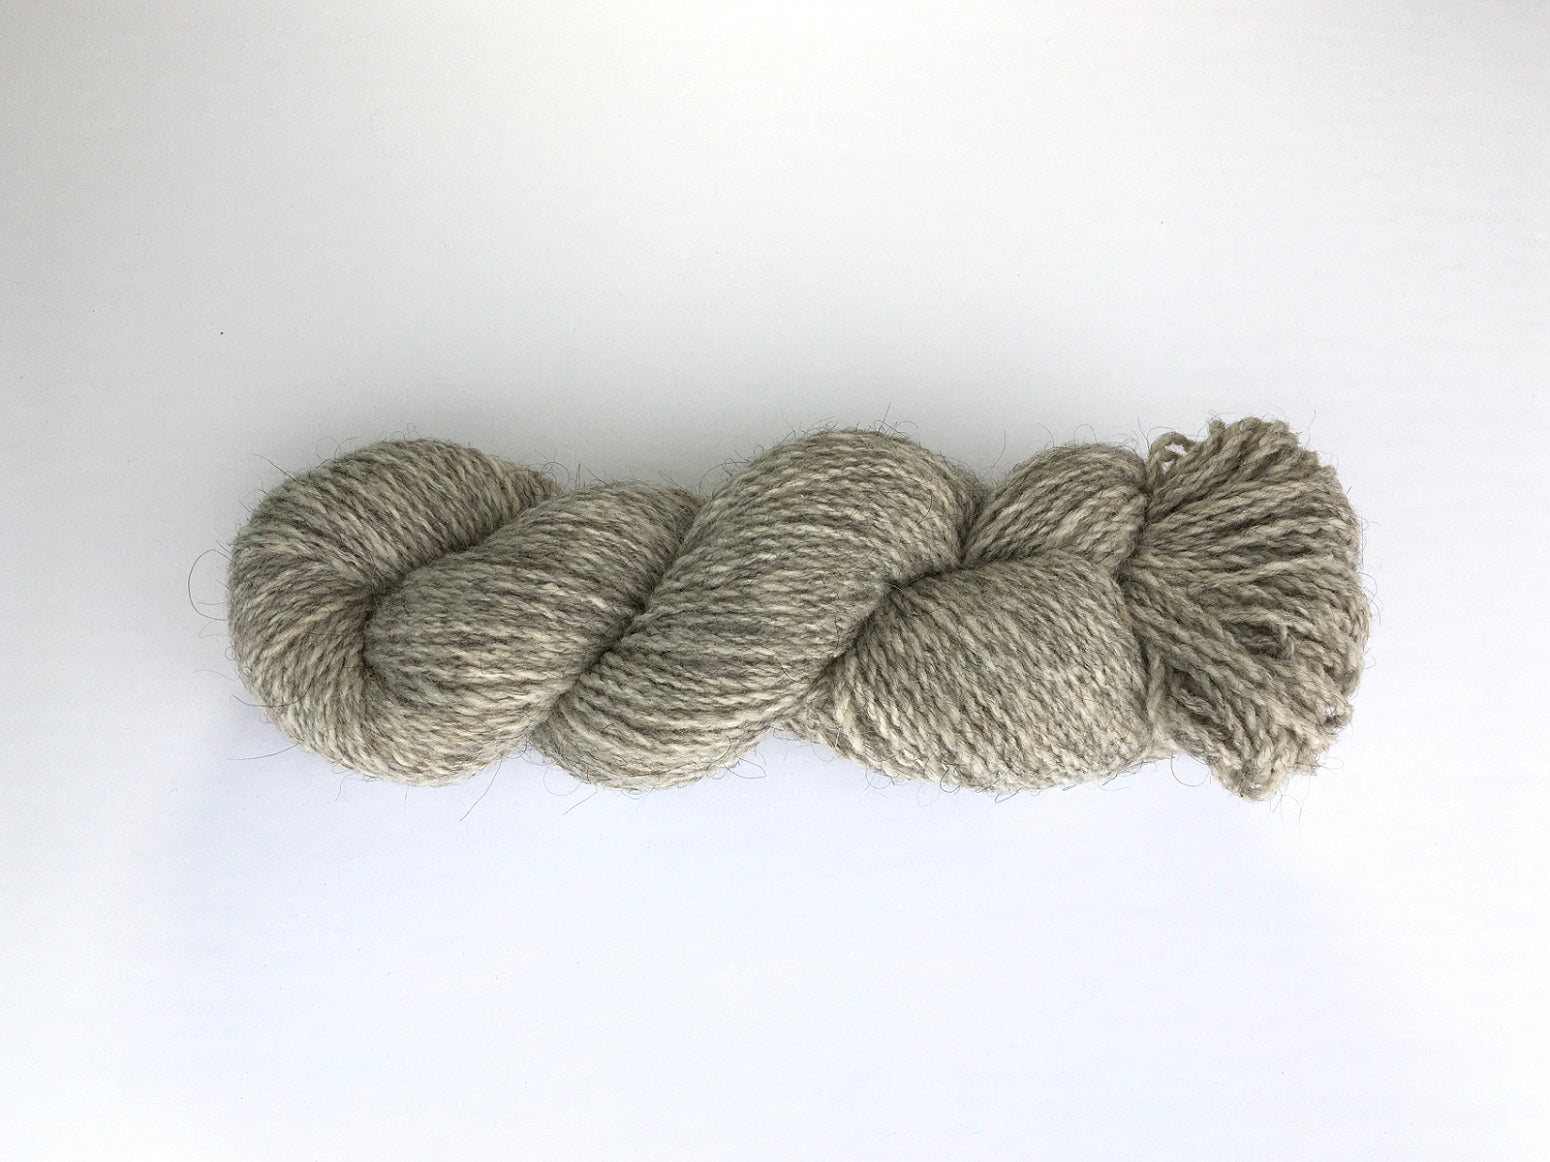 One hank of heathered light cool grey Ramo Worsted weight yarn